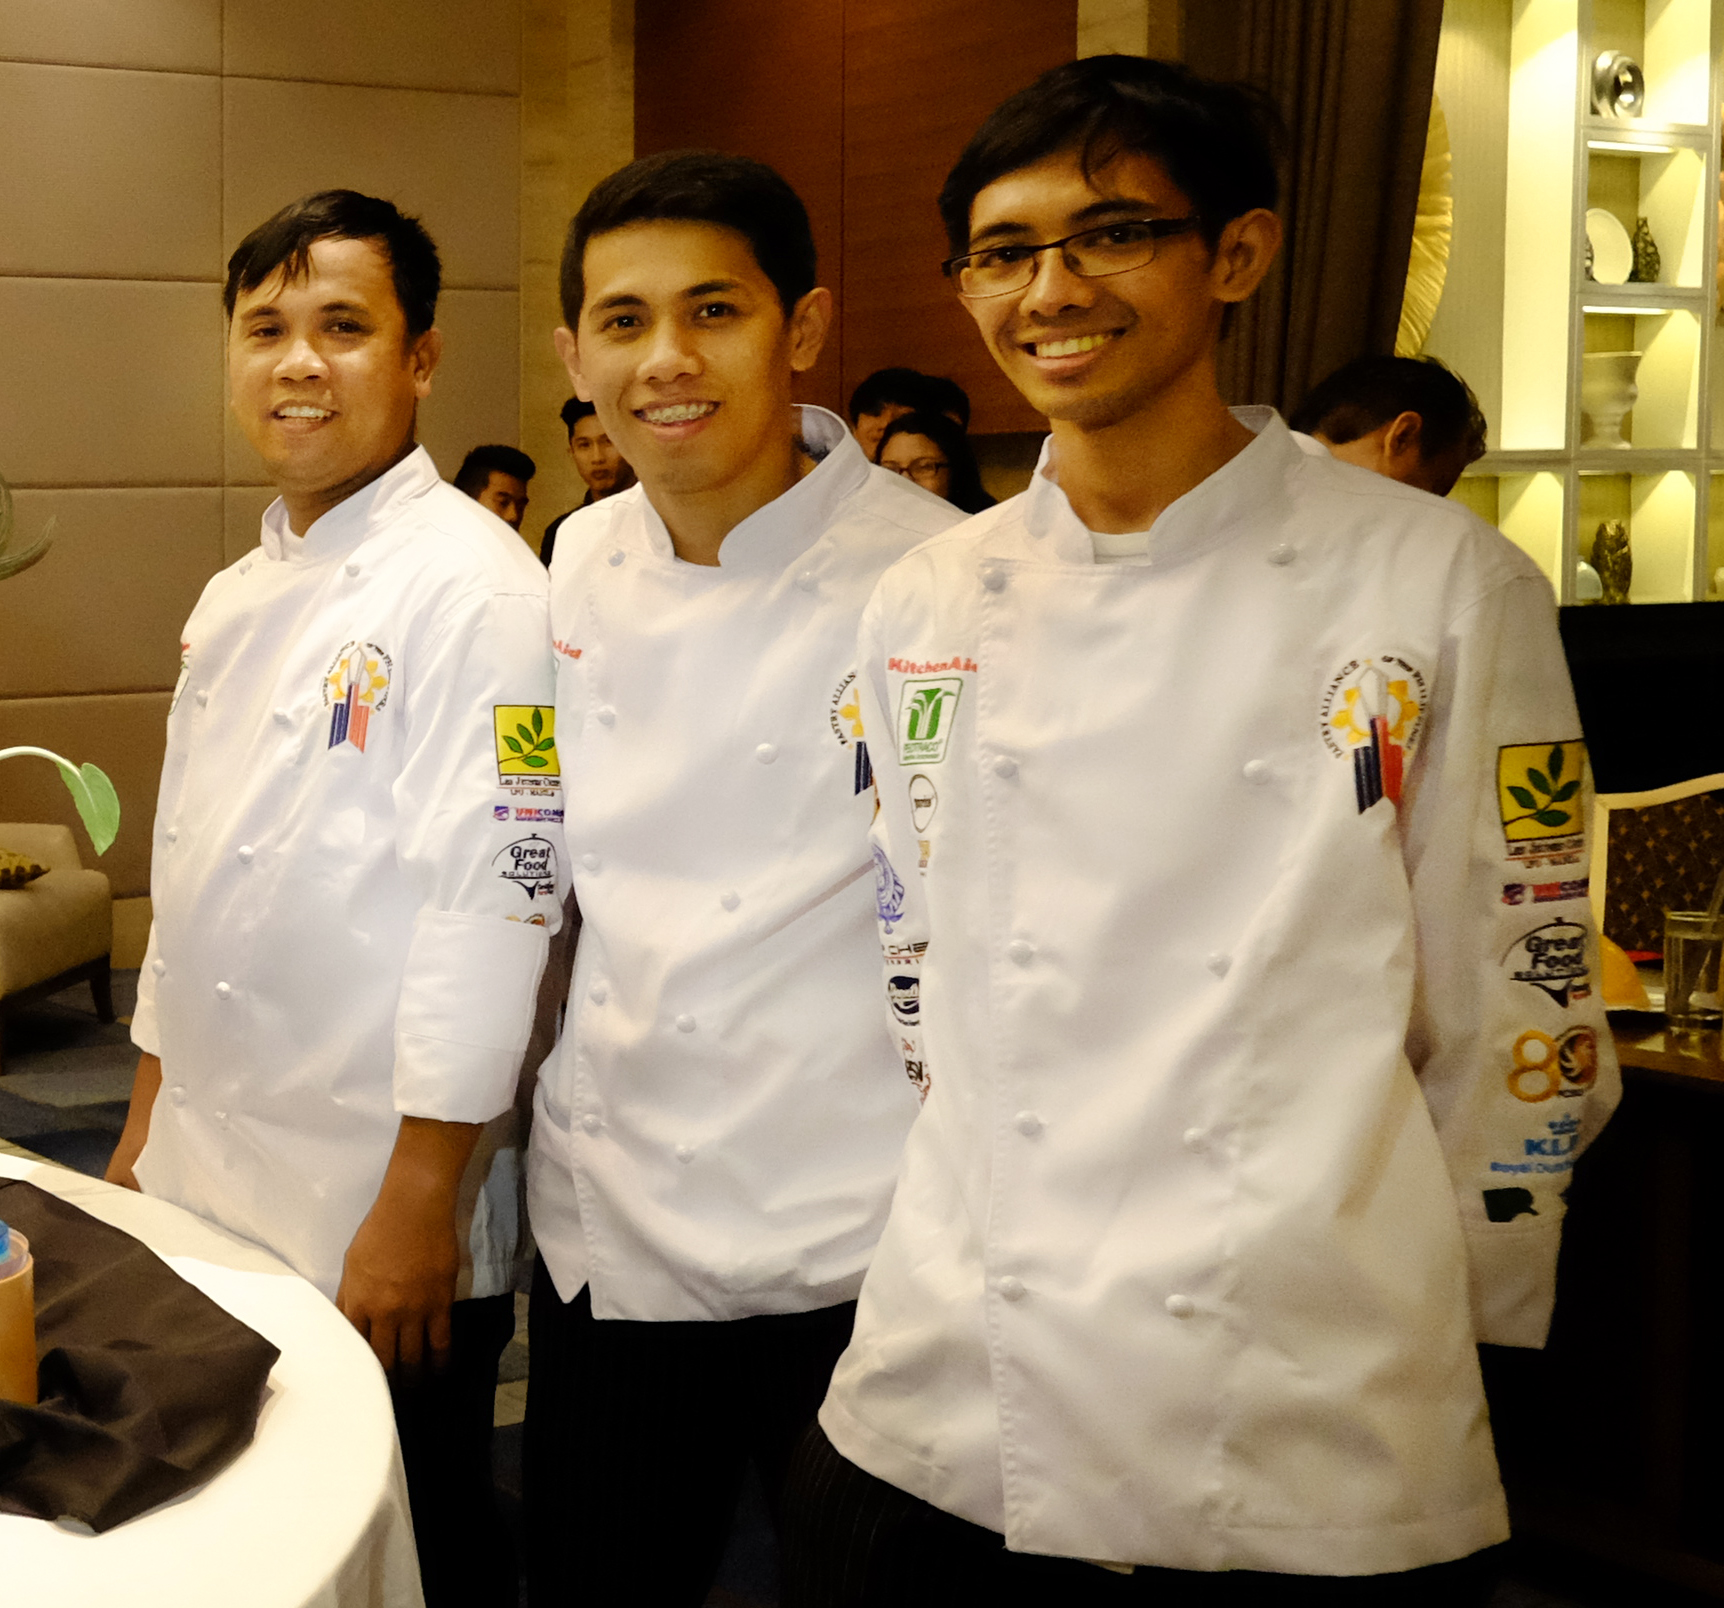 Team Philippines, from left: Vicente Cahatol, Rizalino Manas and Bryan Dimayuga